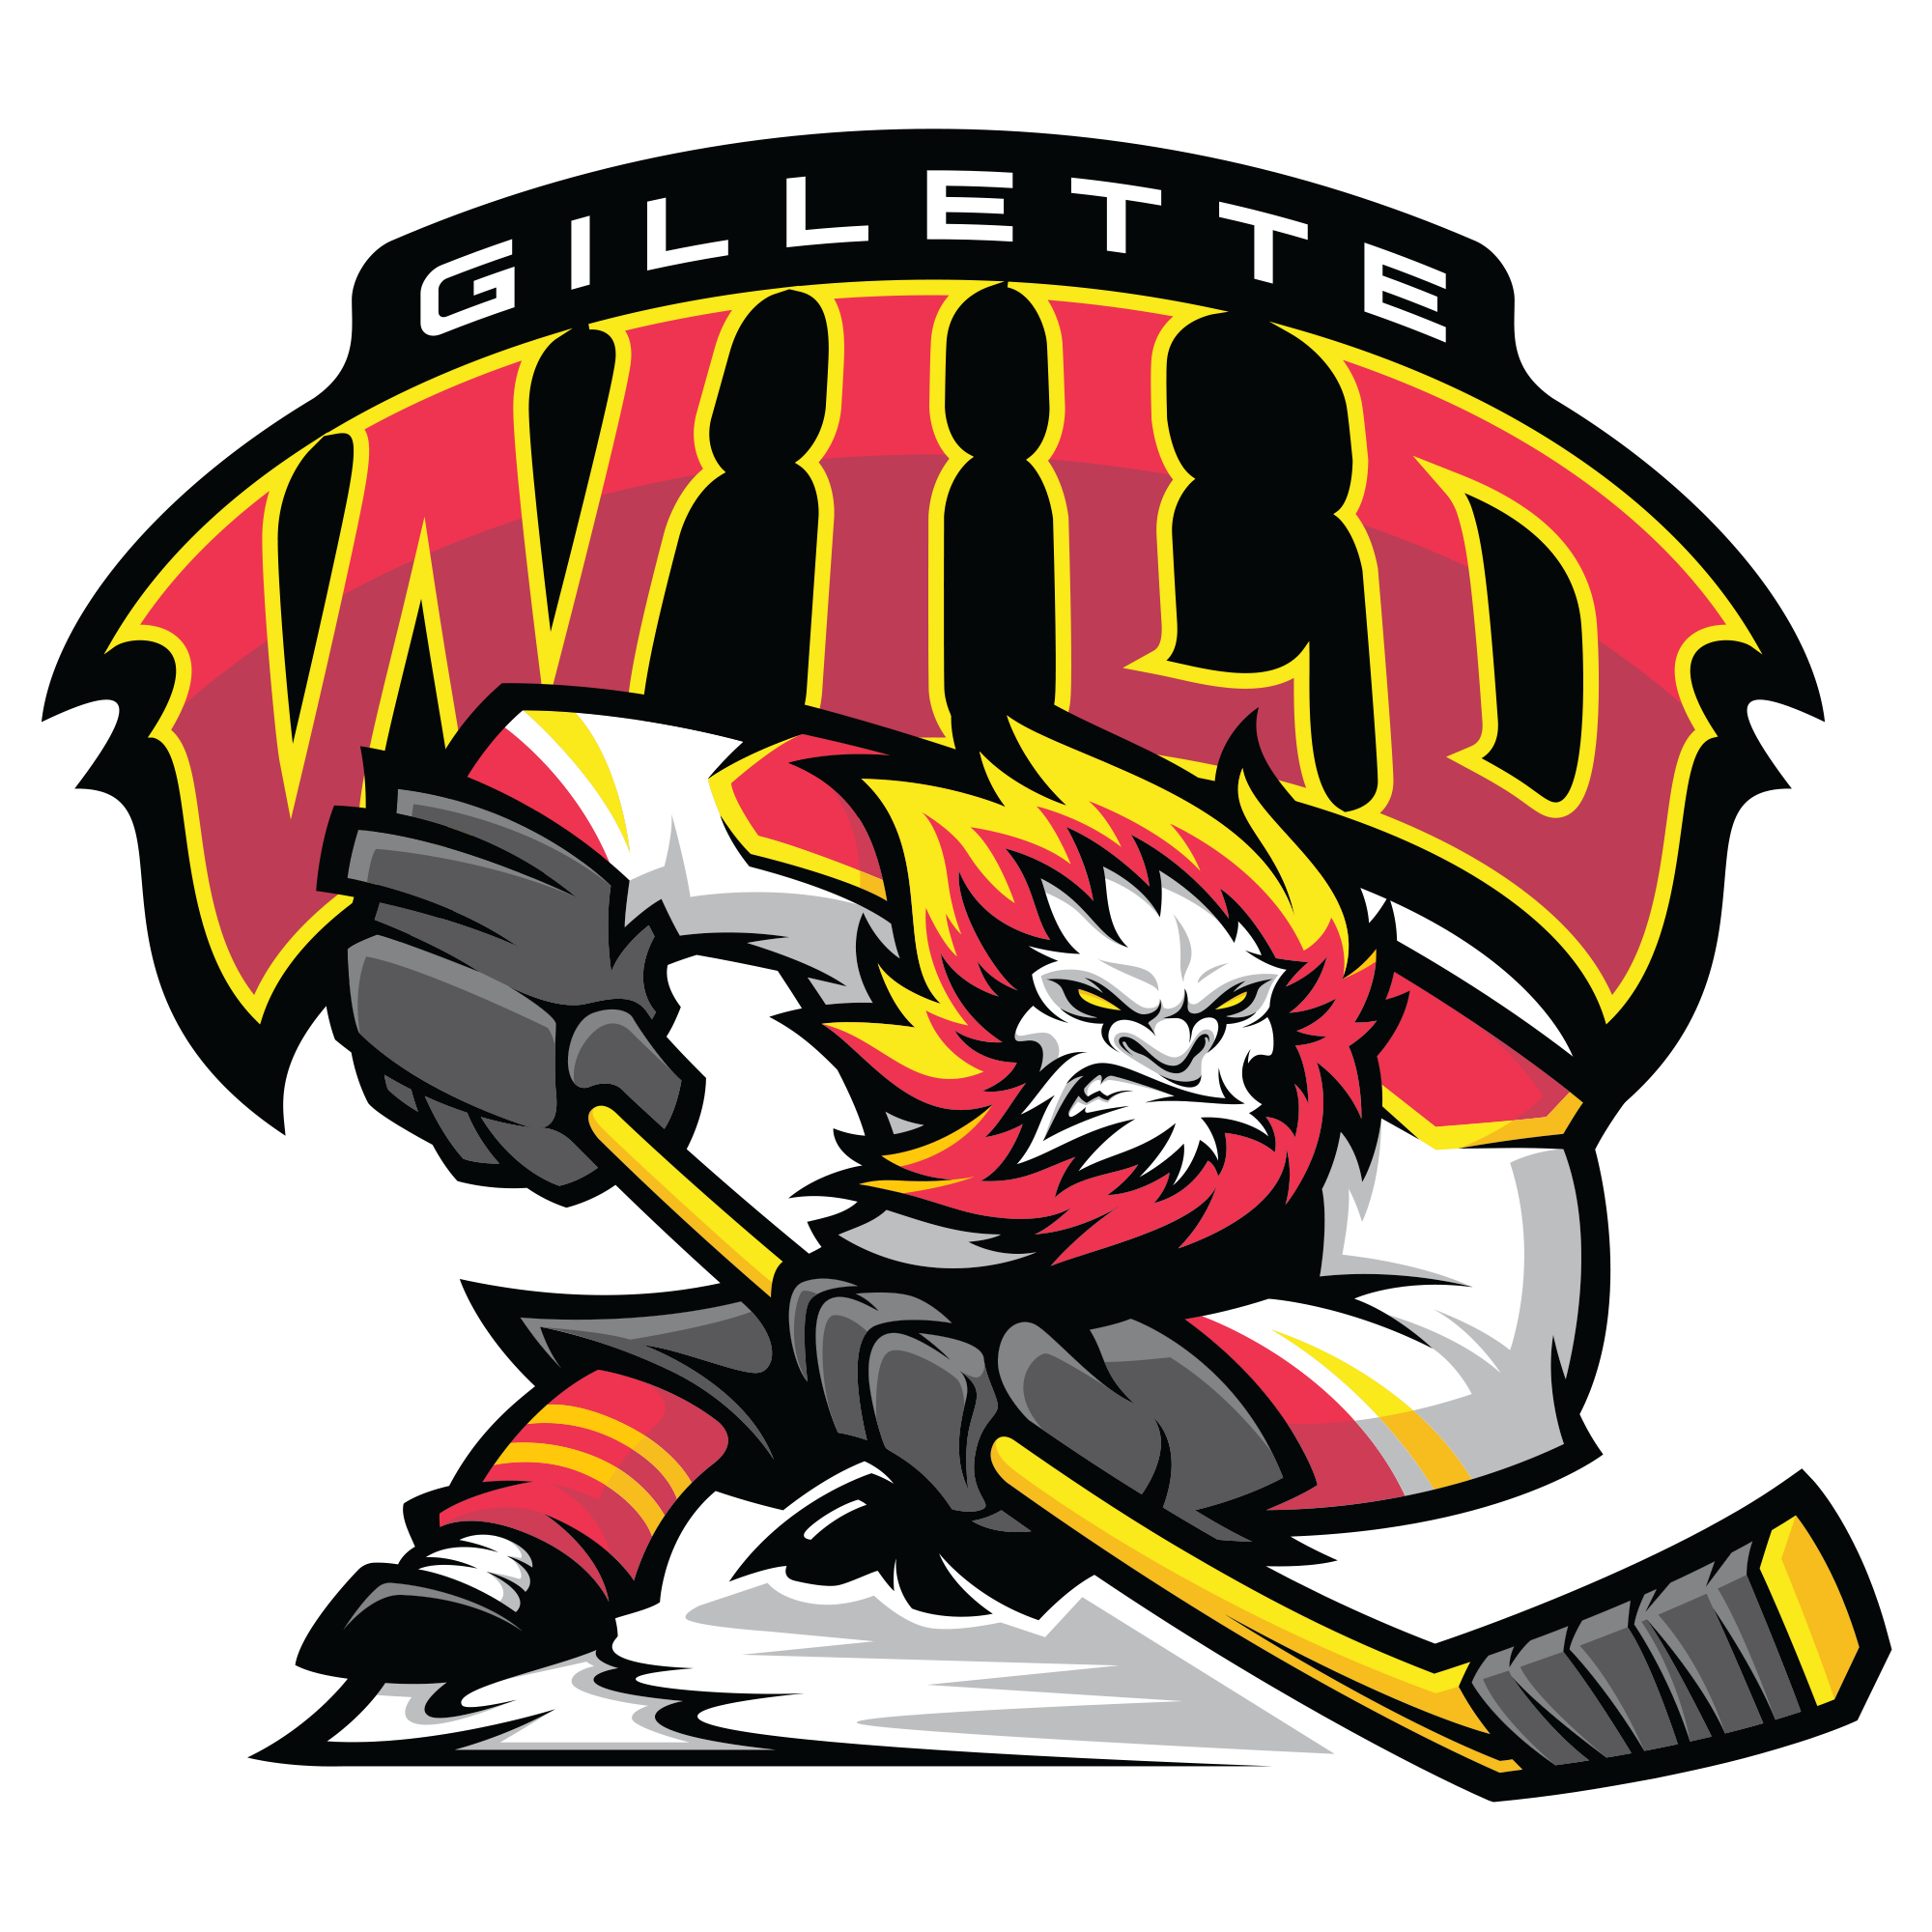 (c) Gillettewildhockey.com